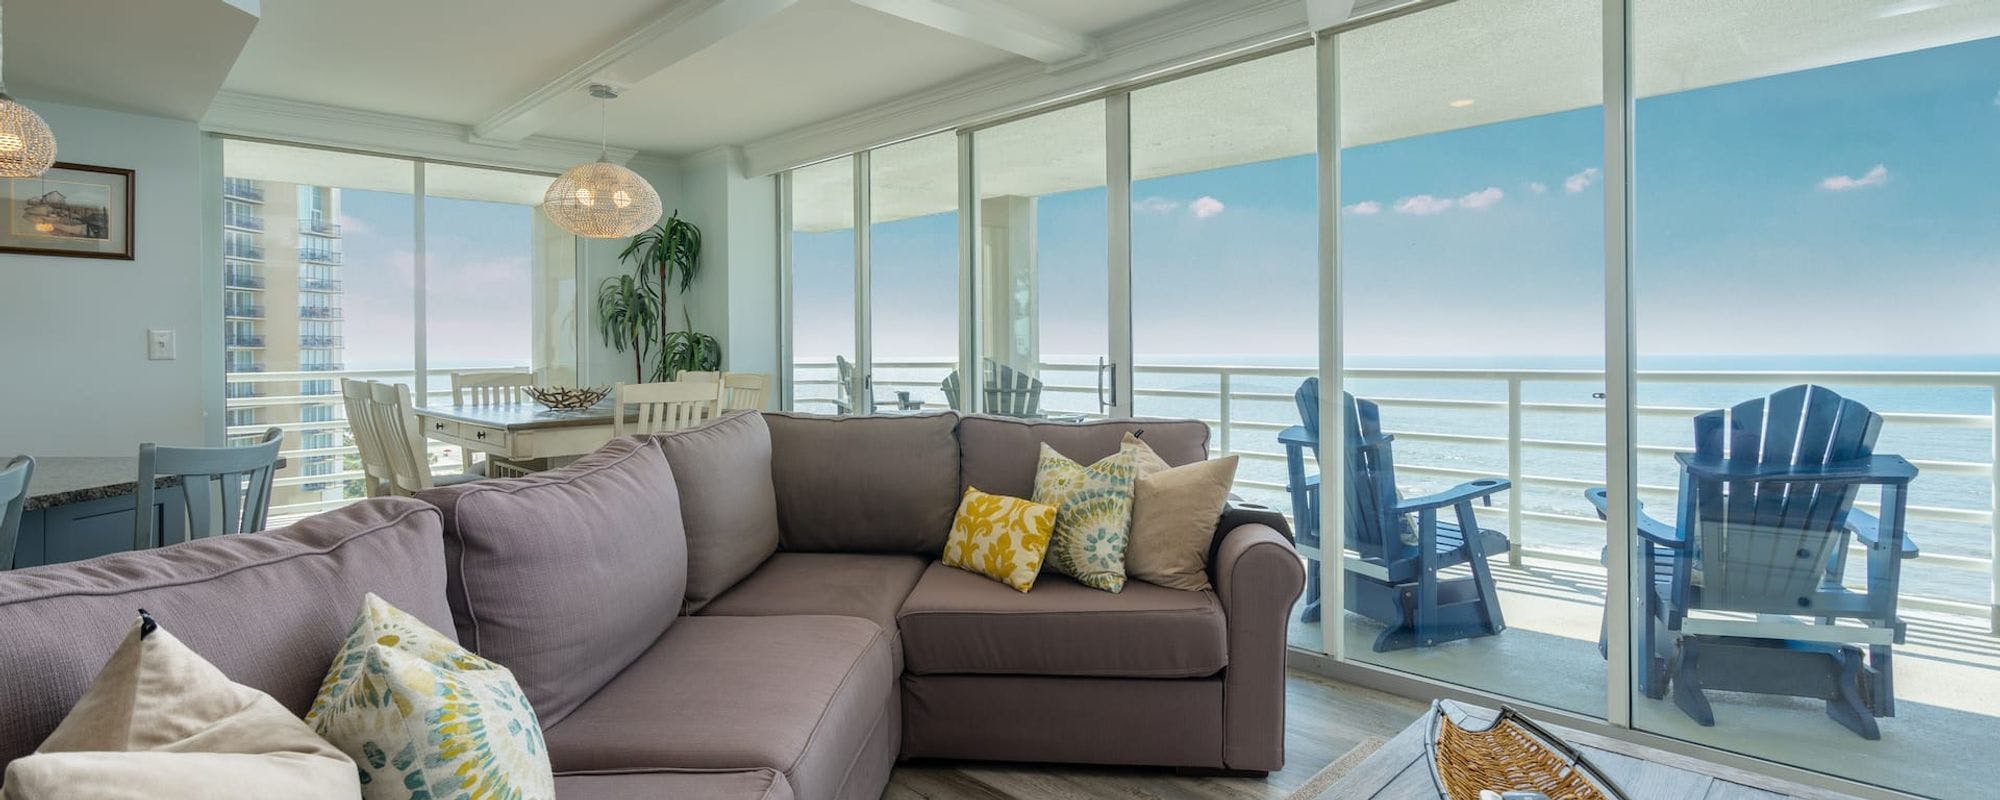 Luxury Myrtle Beach condo rental with views